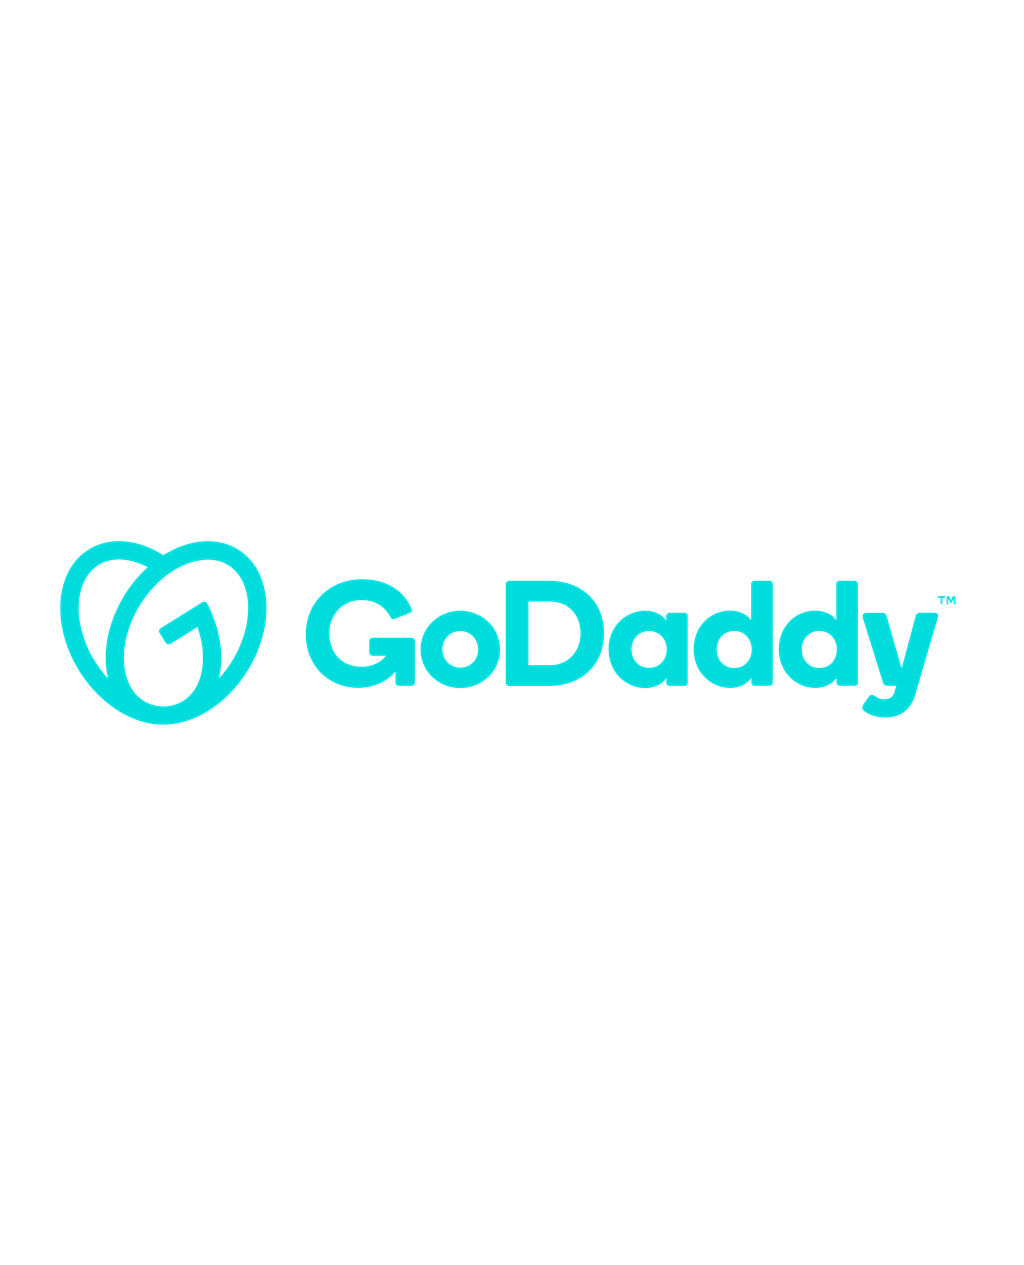 GoDaddy New 2020 logotype, transparent .png, medium, large